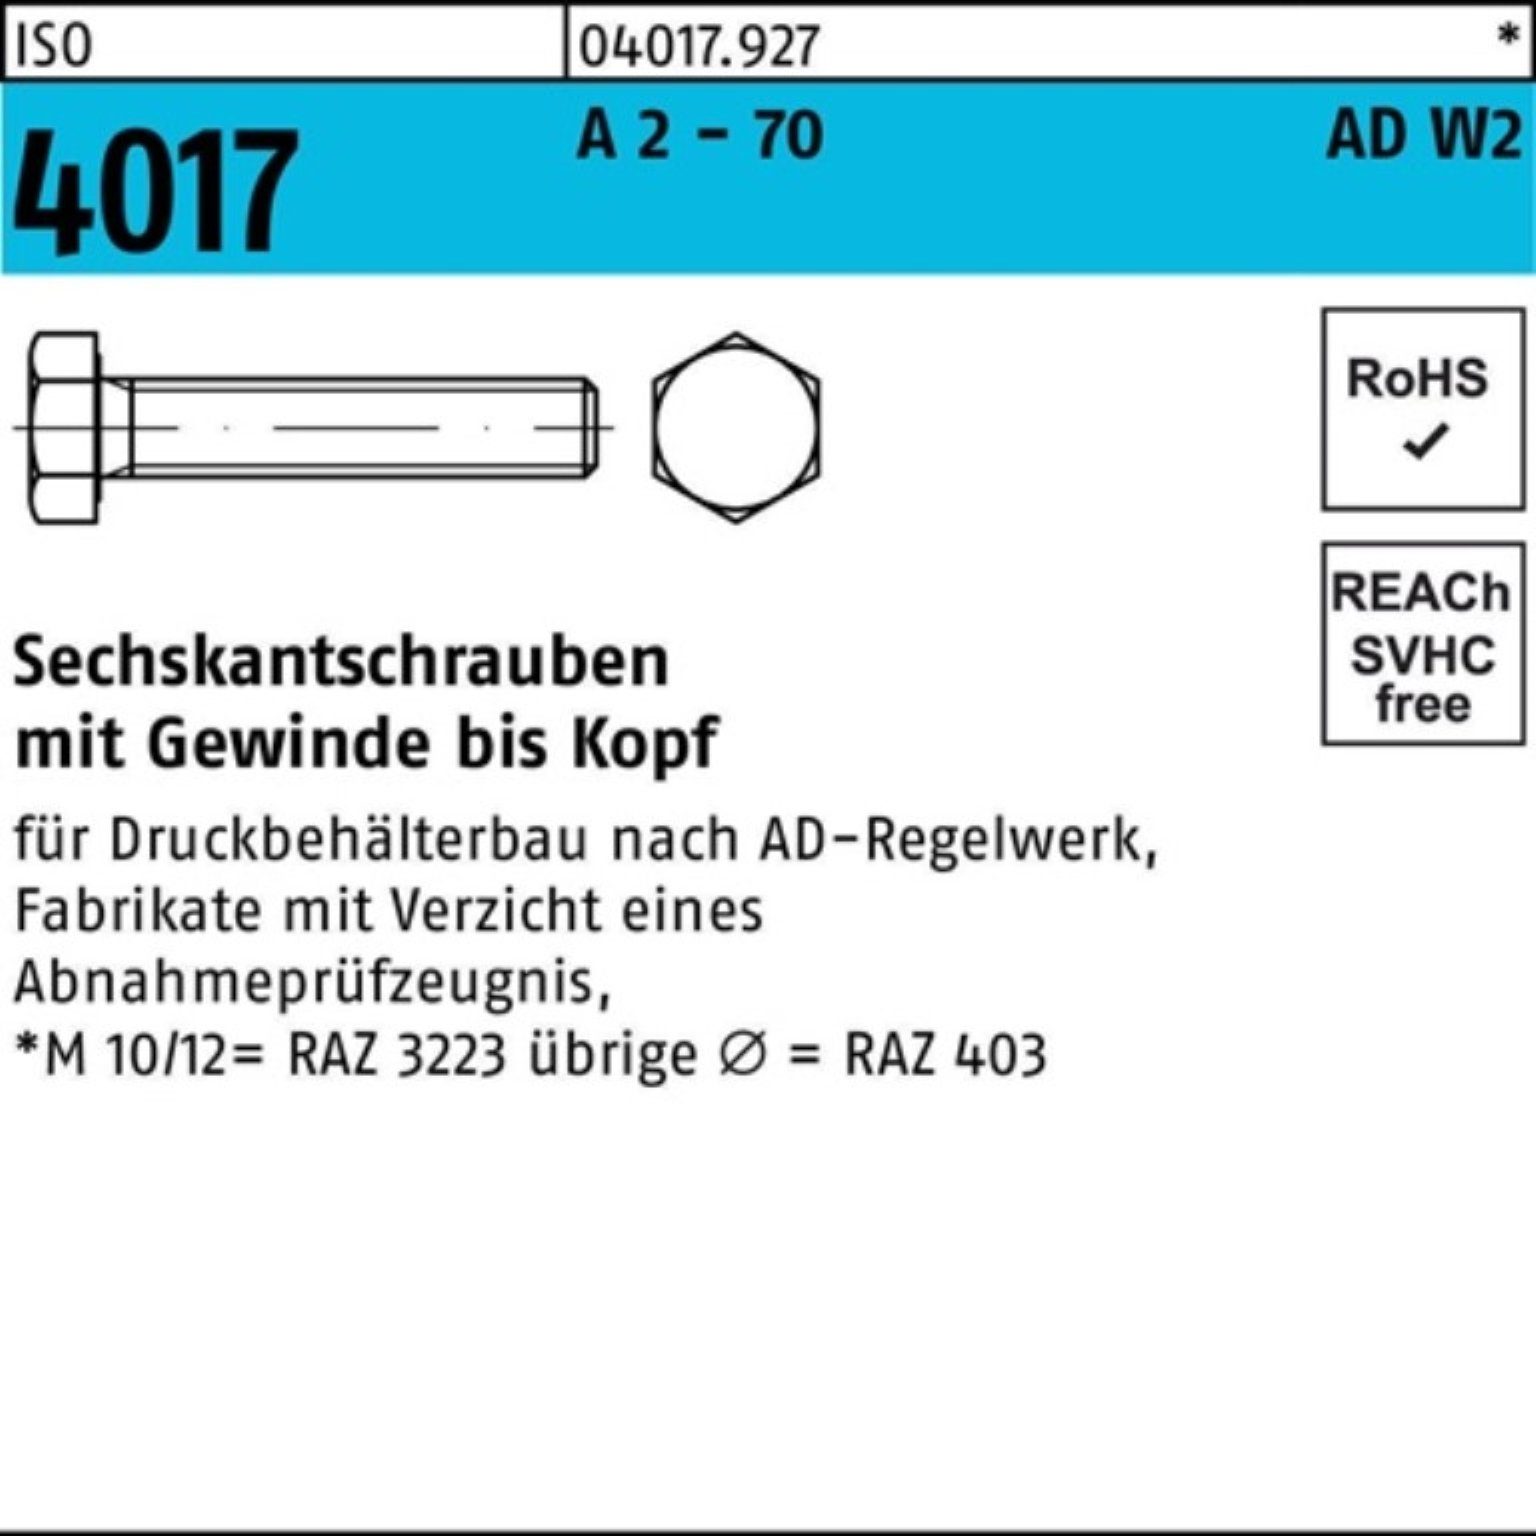 Bufab Sechskantschraube 100er Pack Sechskantschraube ISO 4017 VG M16x 75 A 2 - 70 AD-W2 25 St